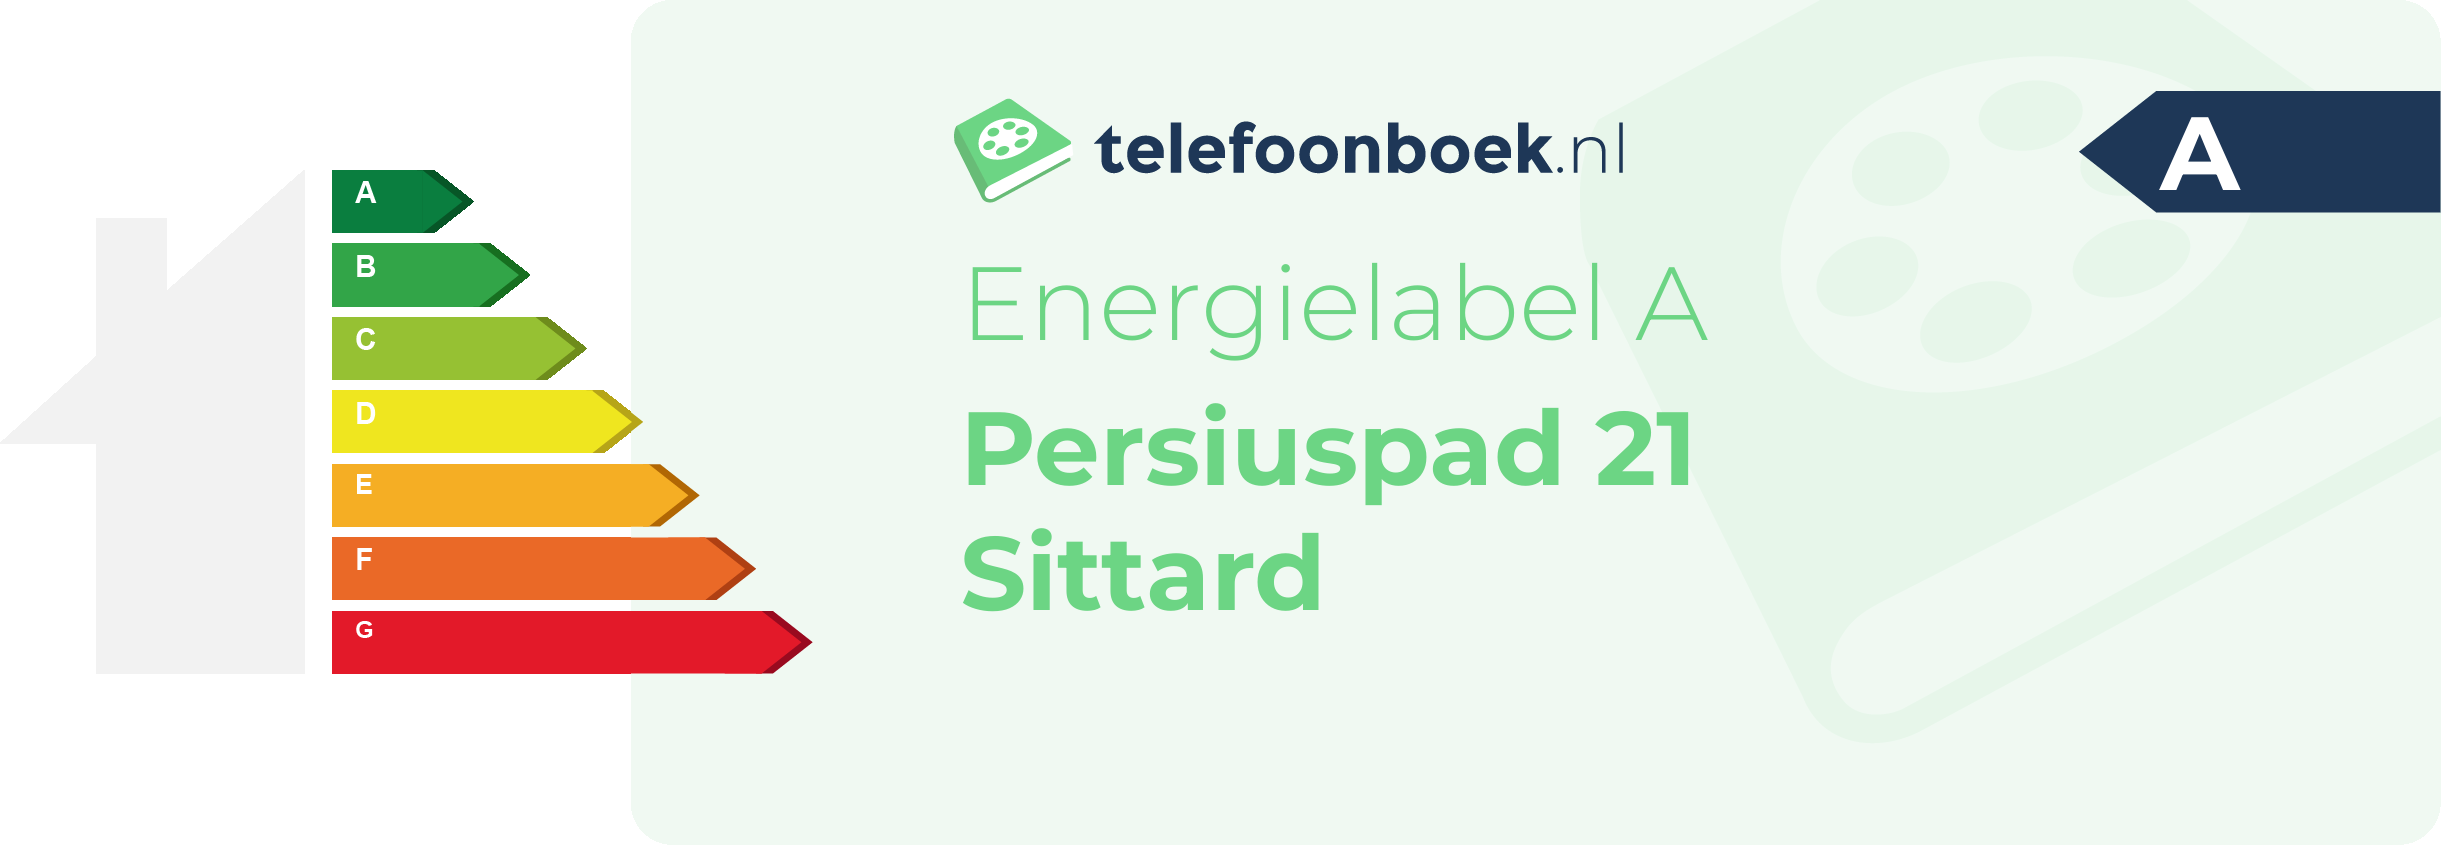 Energielabel Persiuspad 21 Sittard